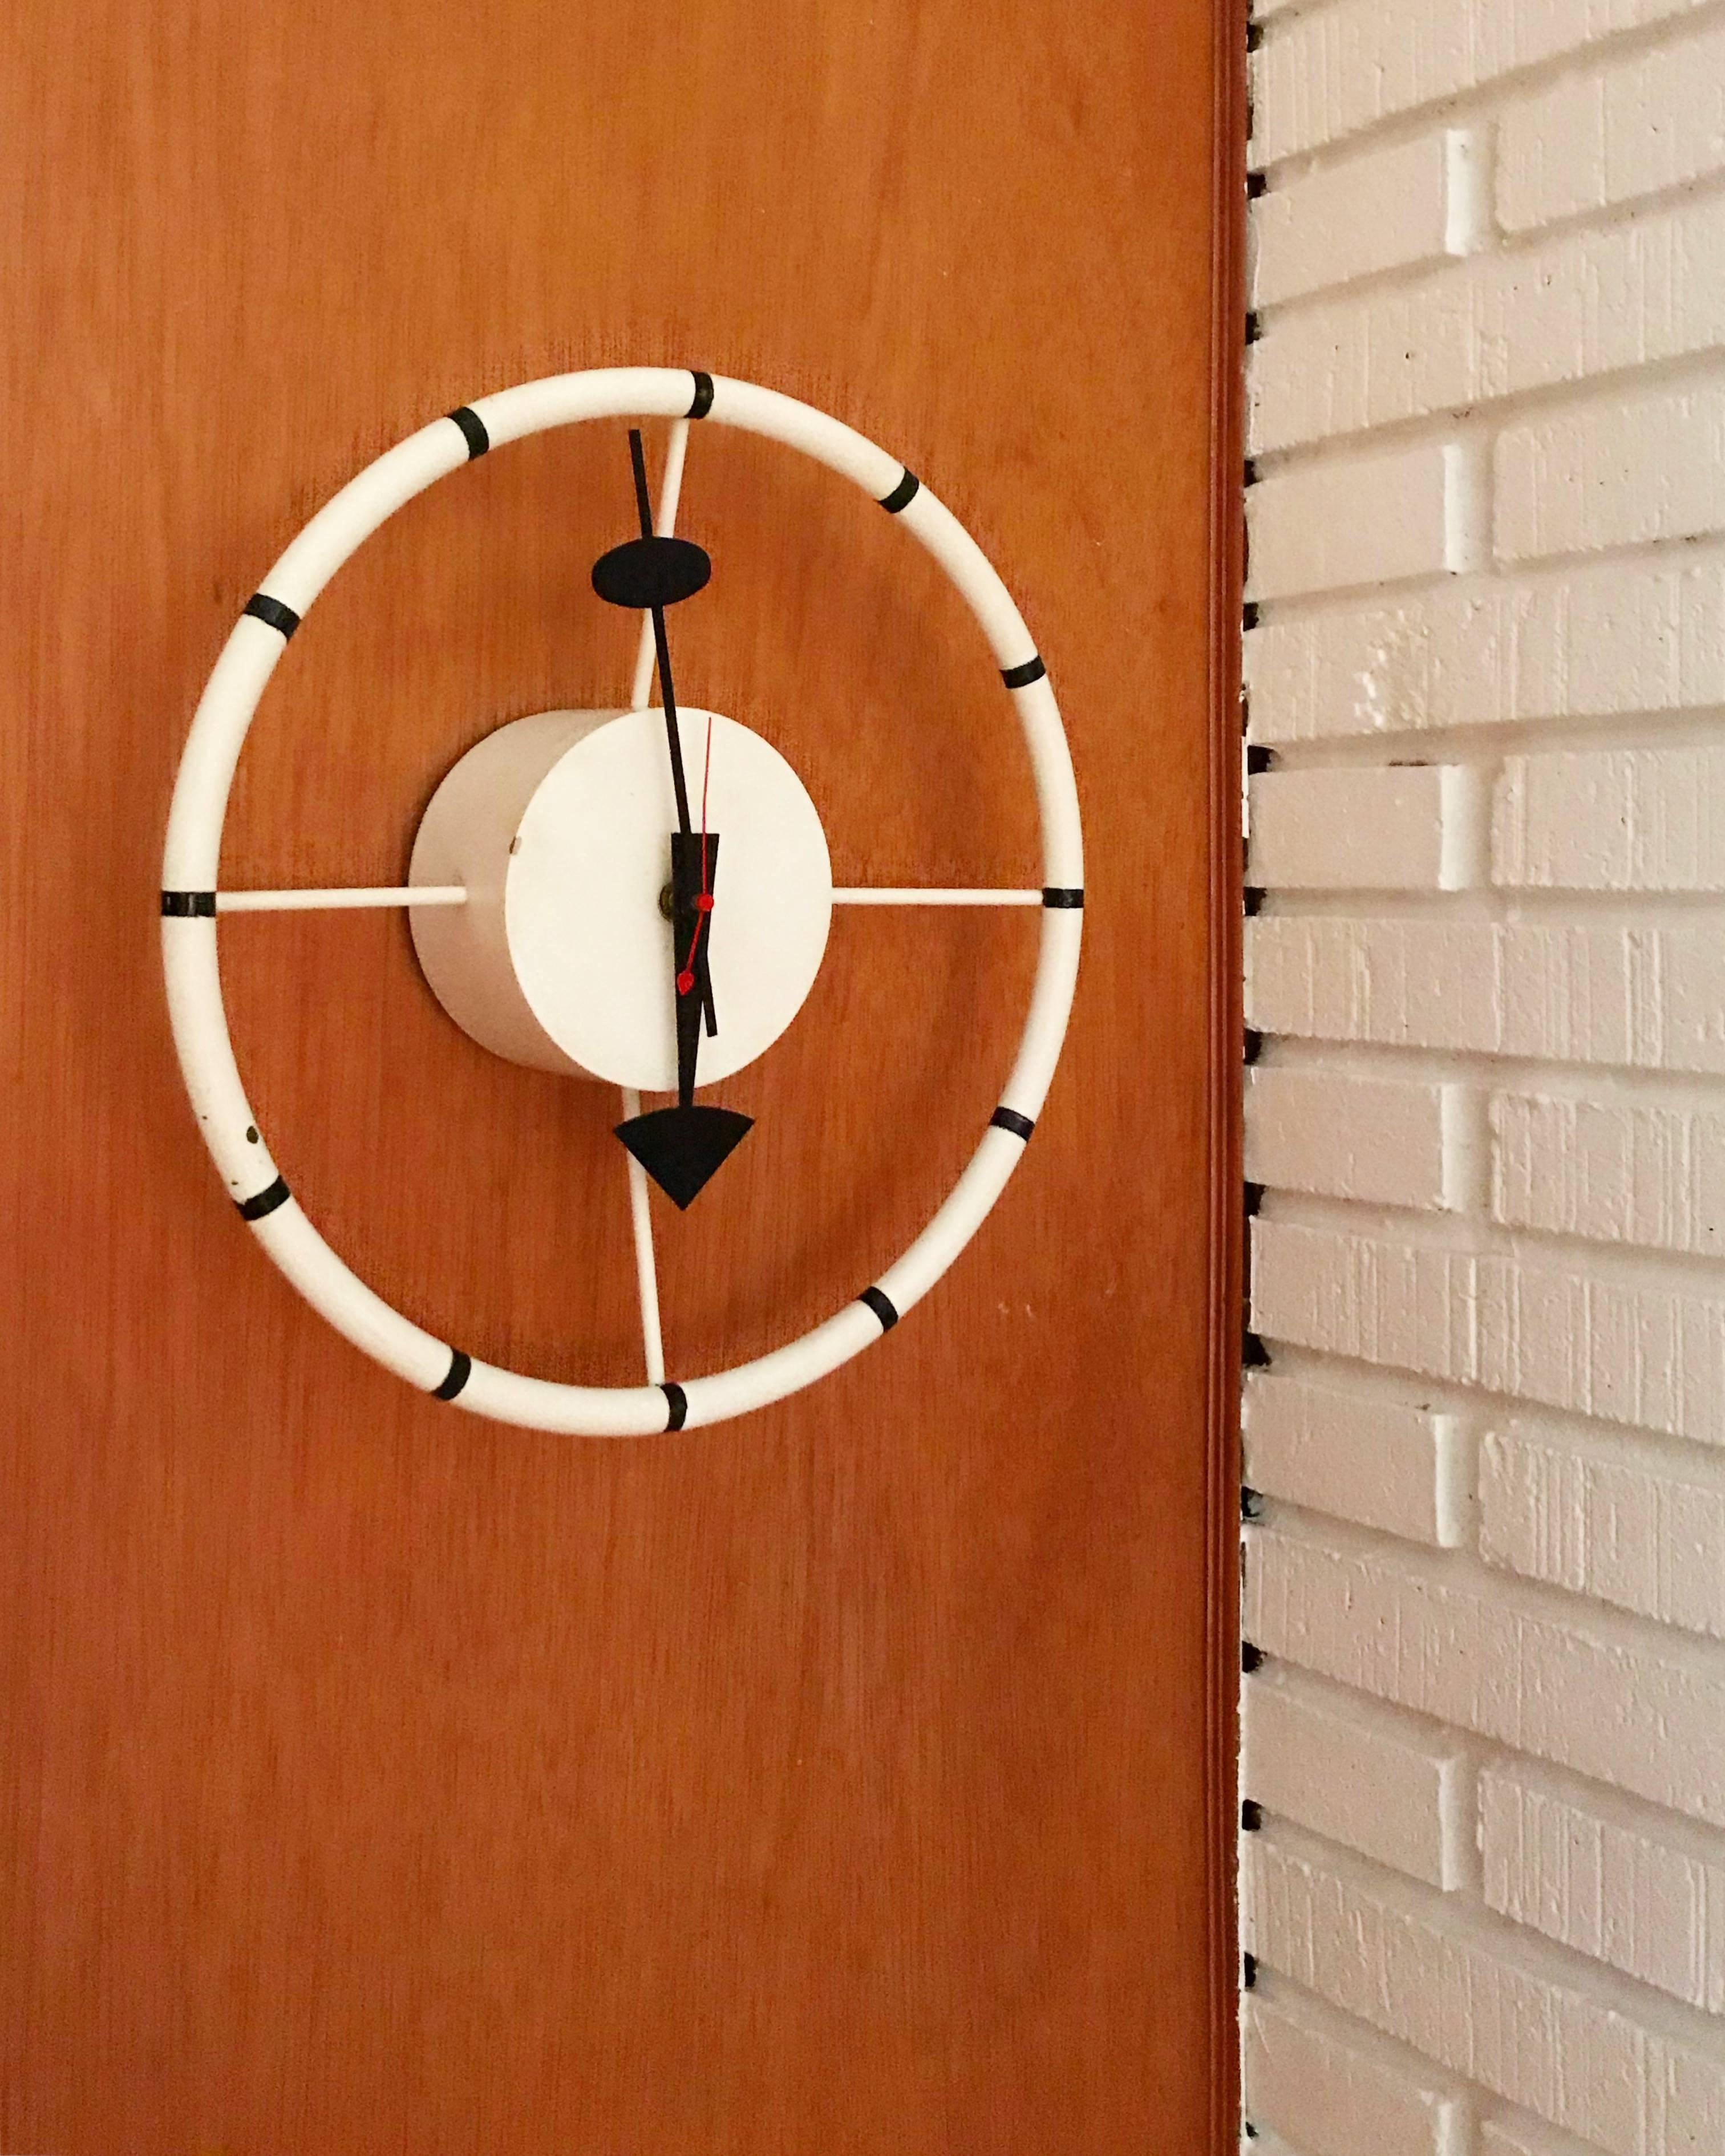 Mid-Century Modern Steering Wheel Wall Clock by George Nelson for Howard Miller